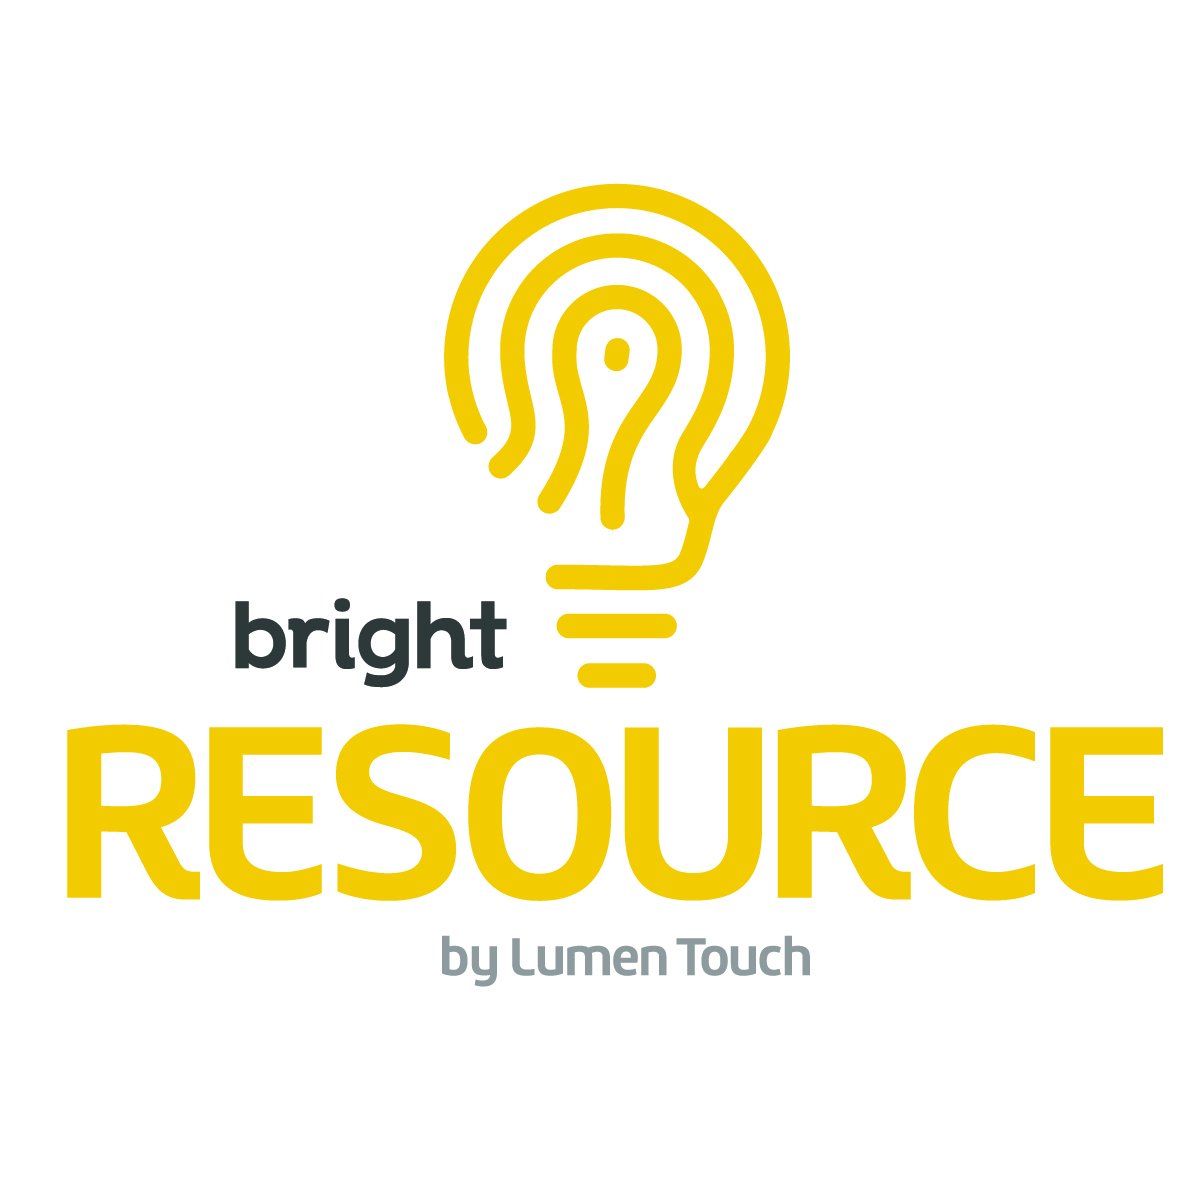 Bright Resource by Lumen Touch